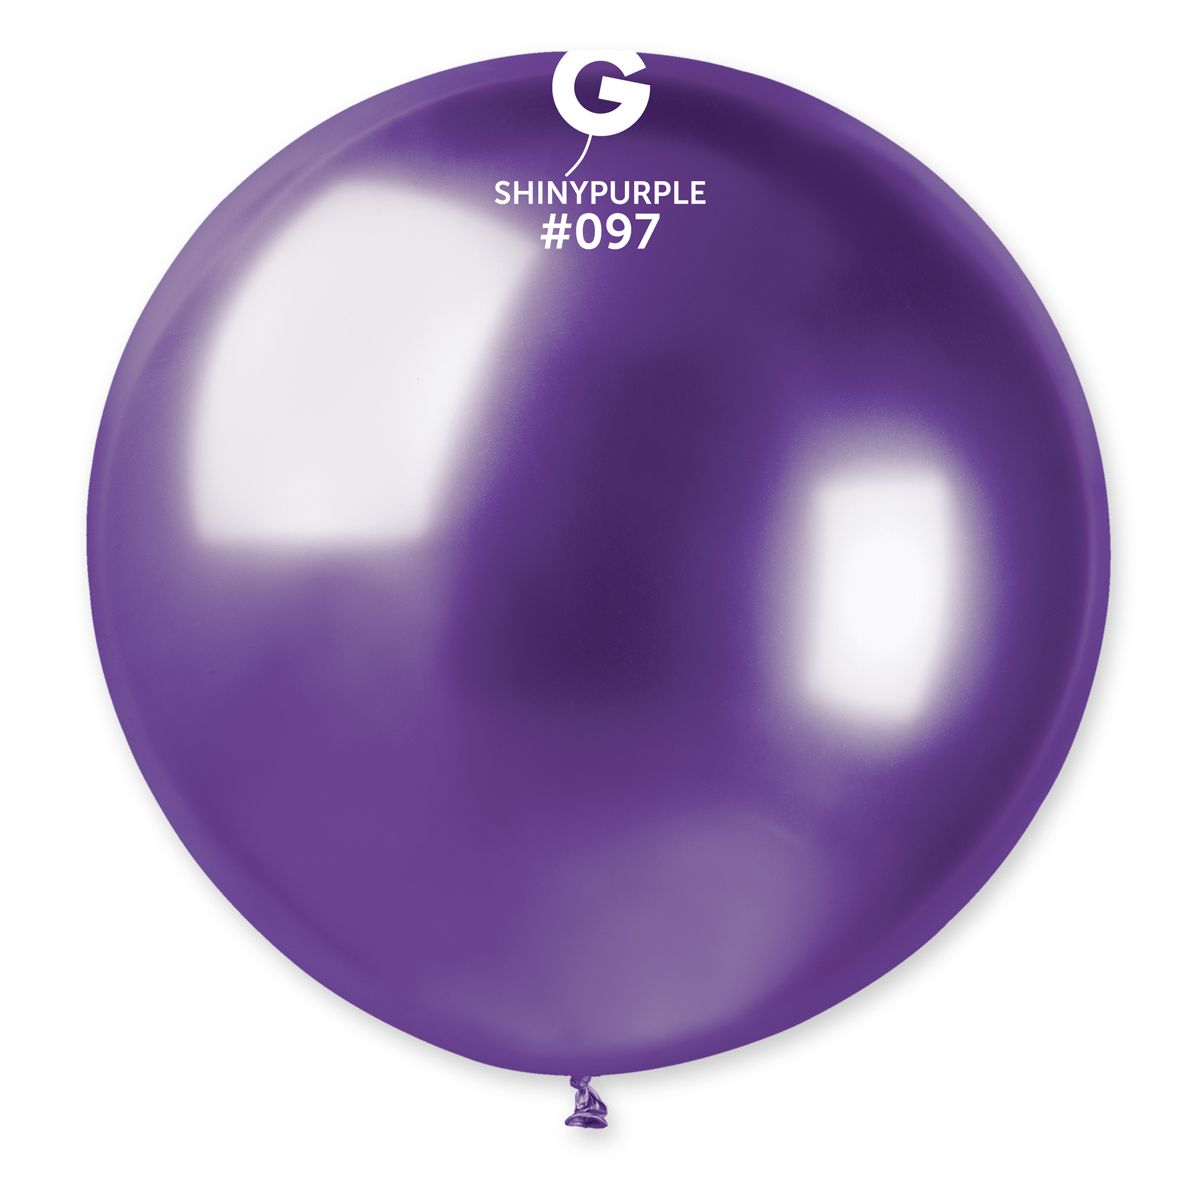 G-30” Shiny Purple #097